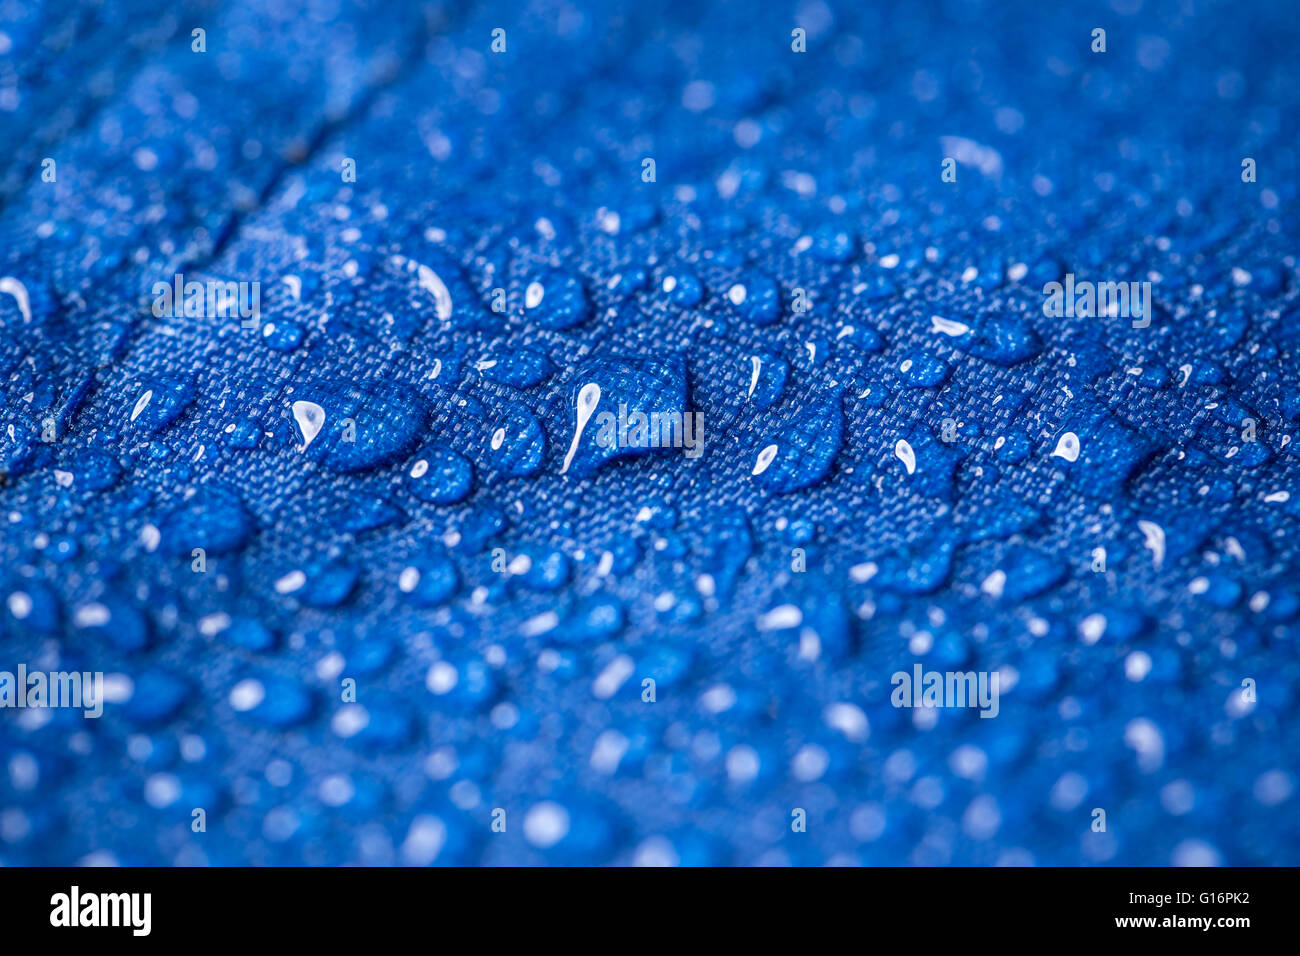 Rain water droplets on blue fiber waterproof fabric Stock Photo